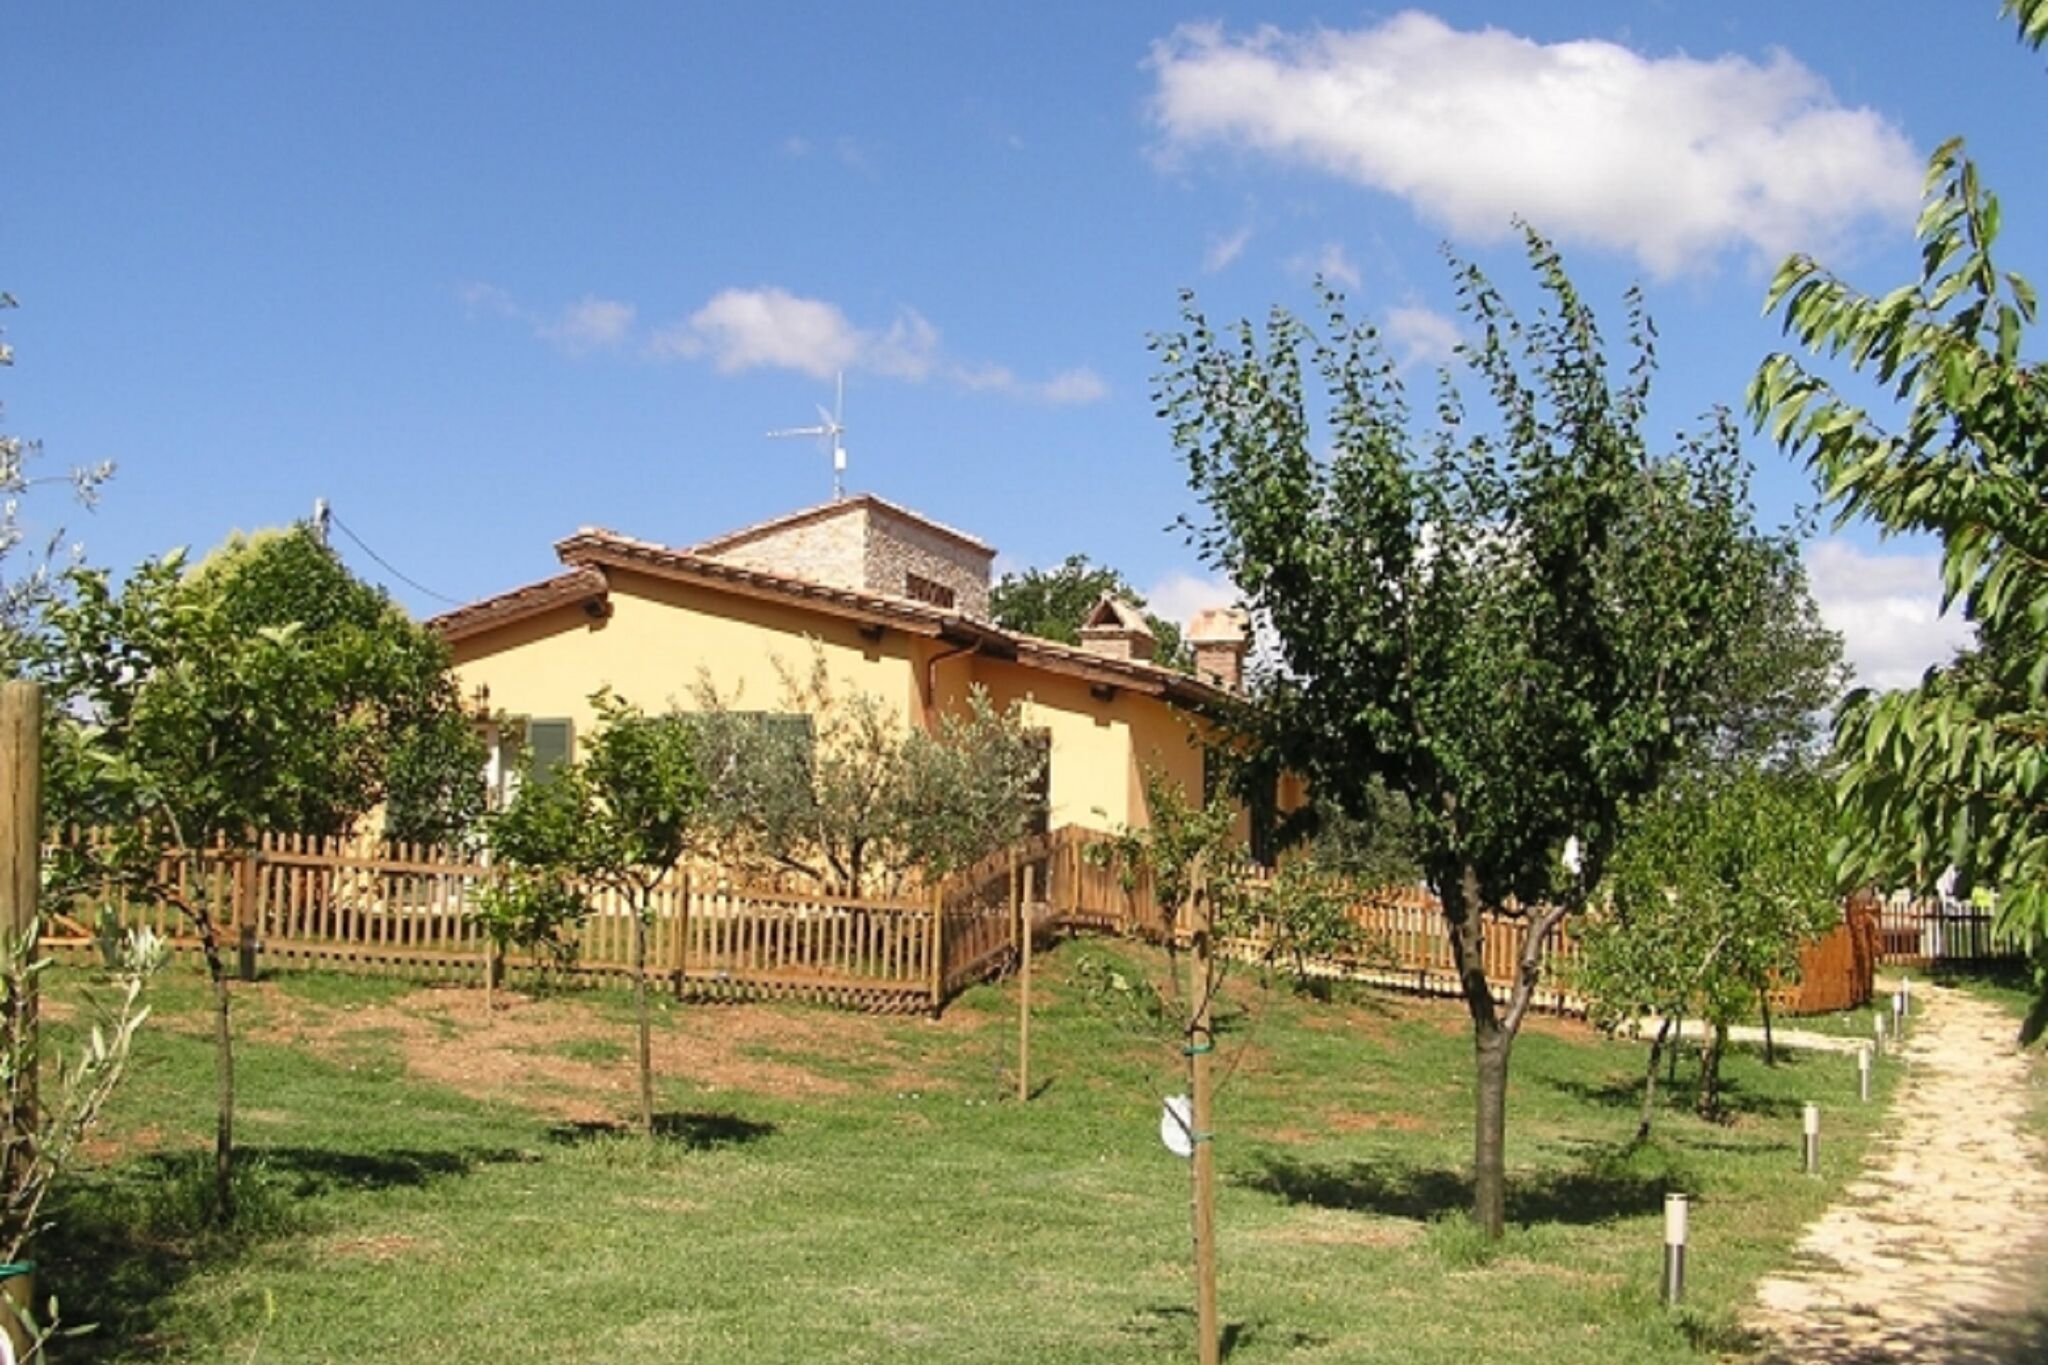 Schönes Ferienhaus in Perugia mit Pool